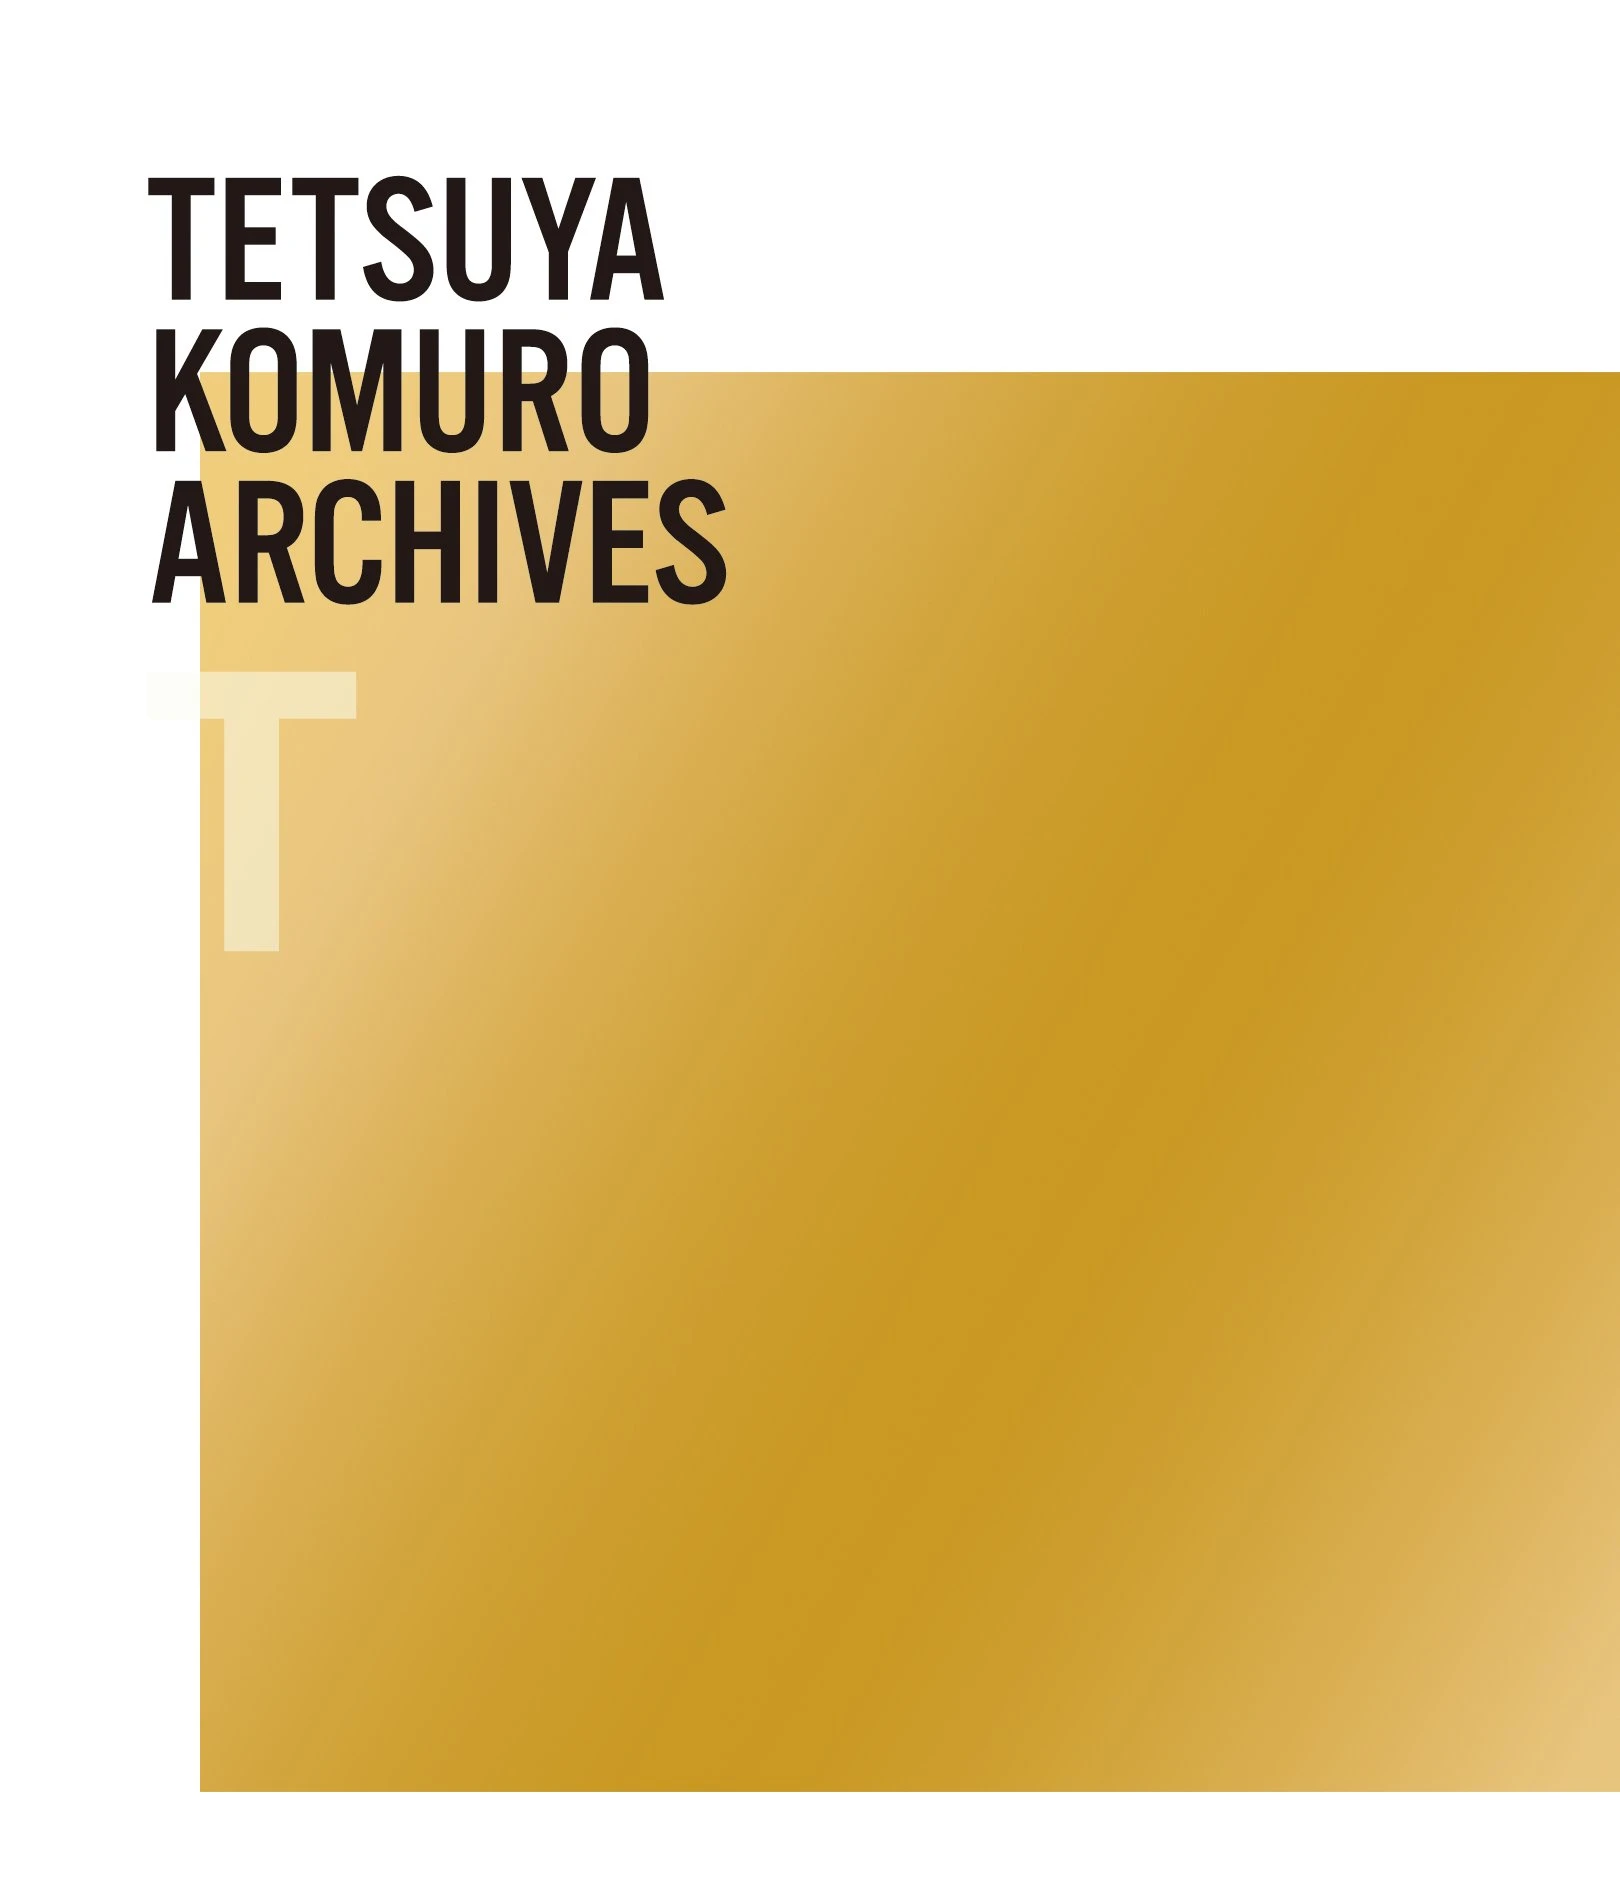 『TETSUYA KOMURO ARCHIVES "T"』